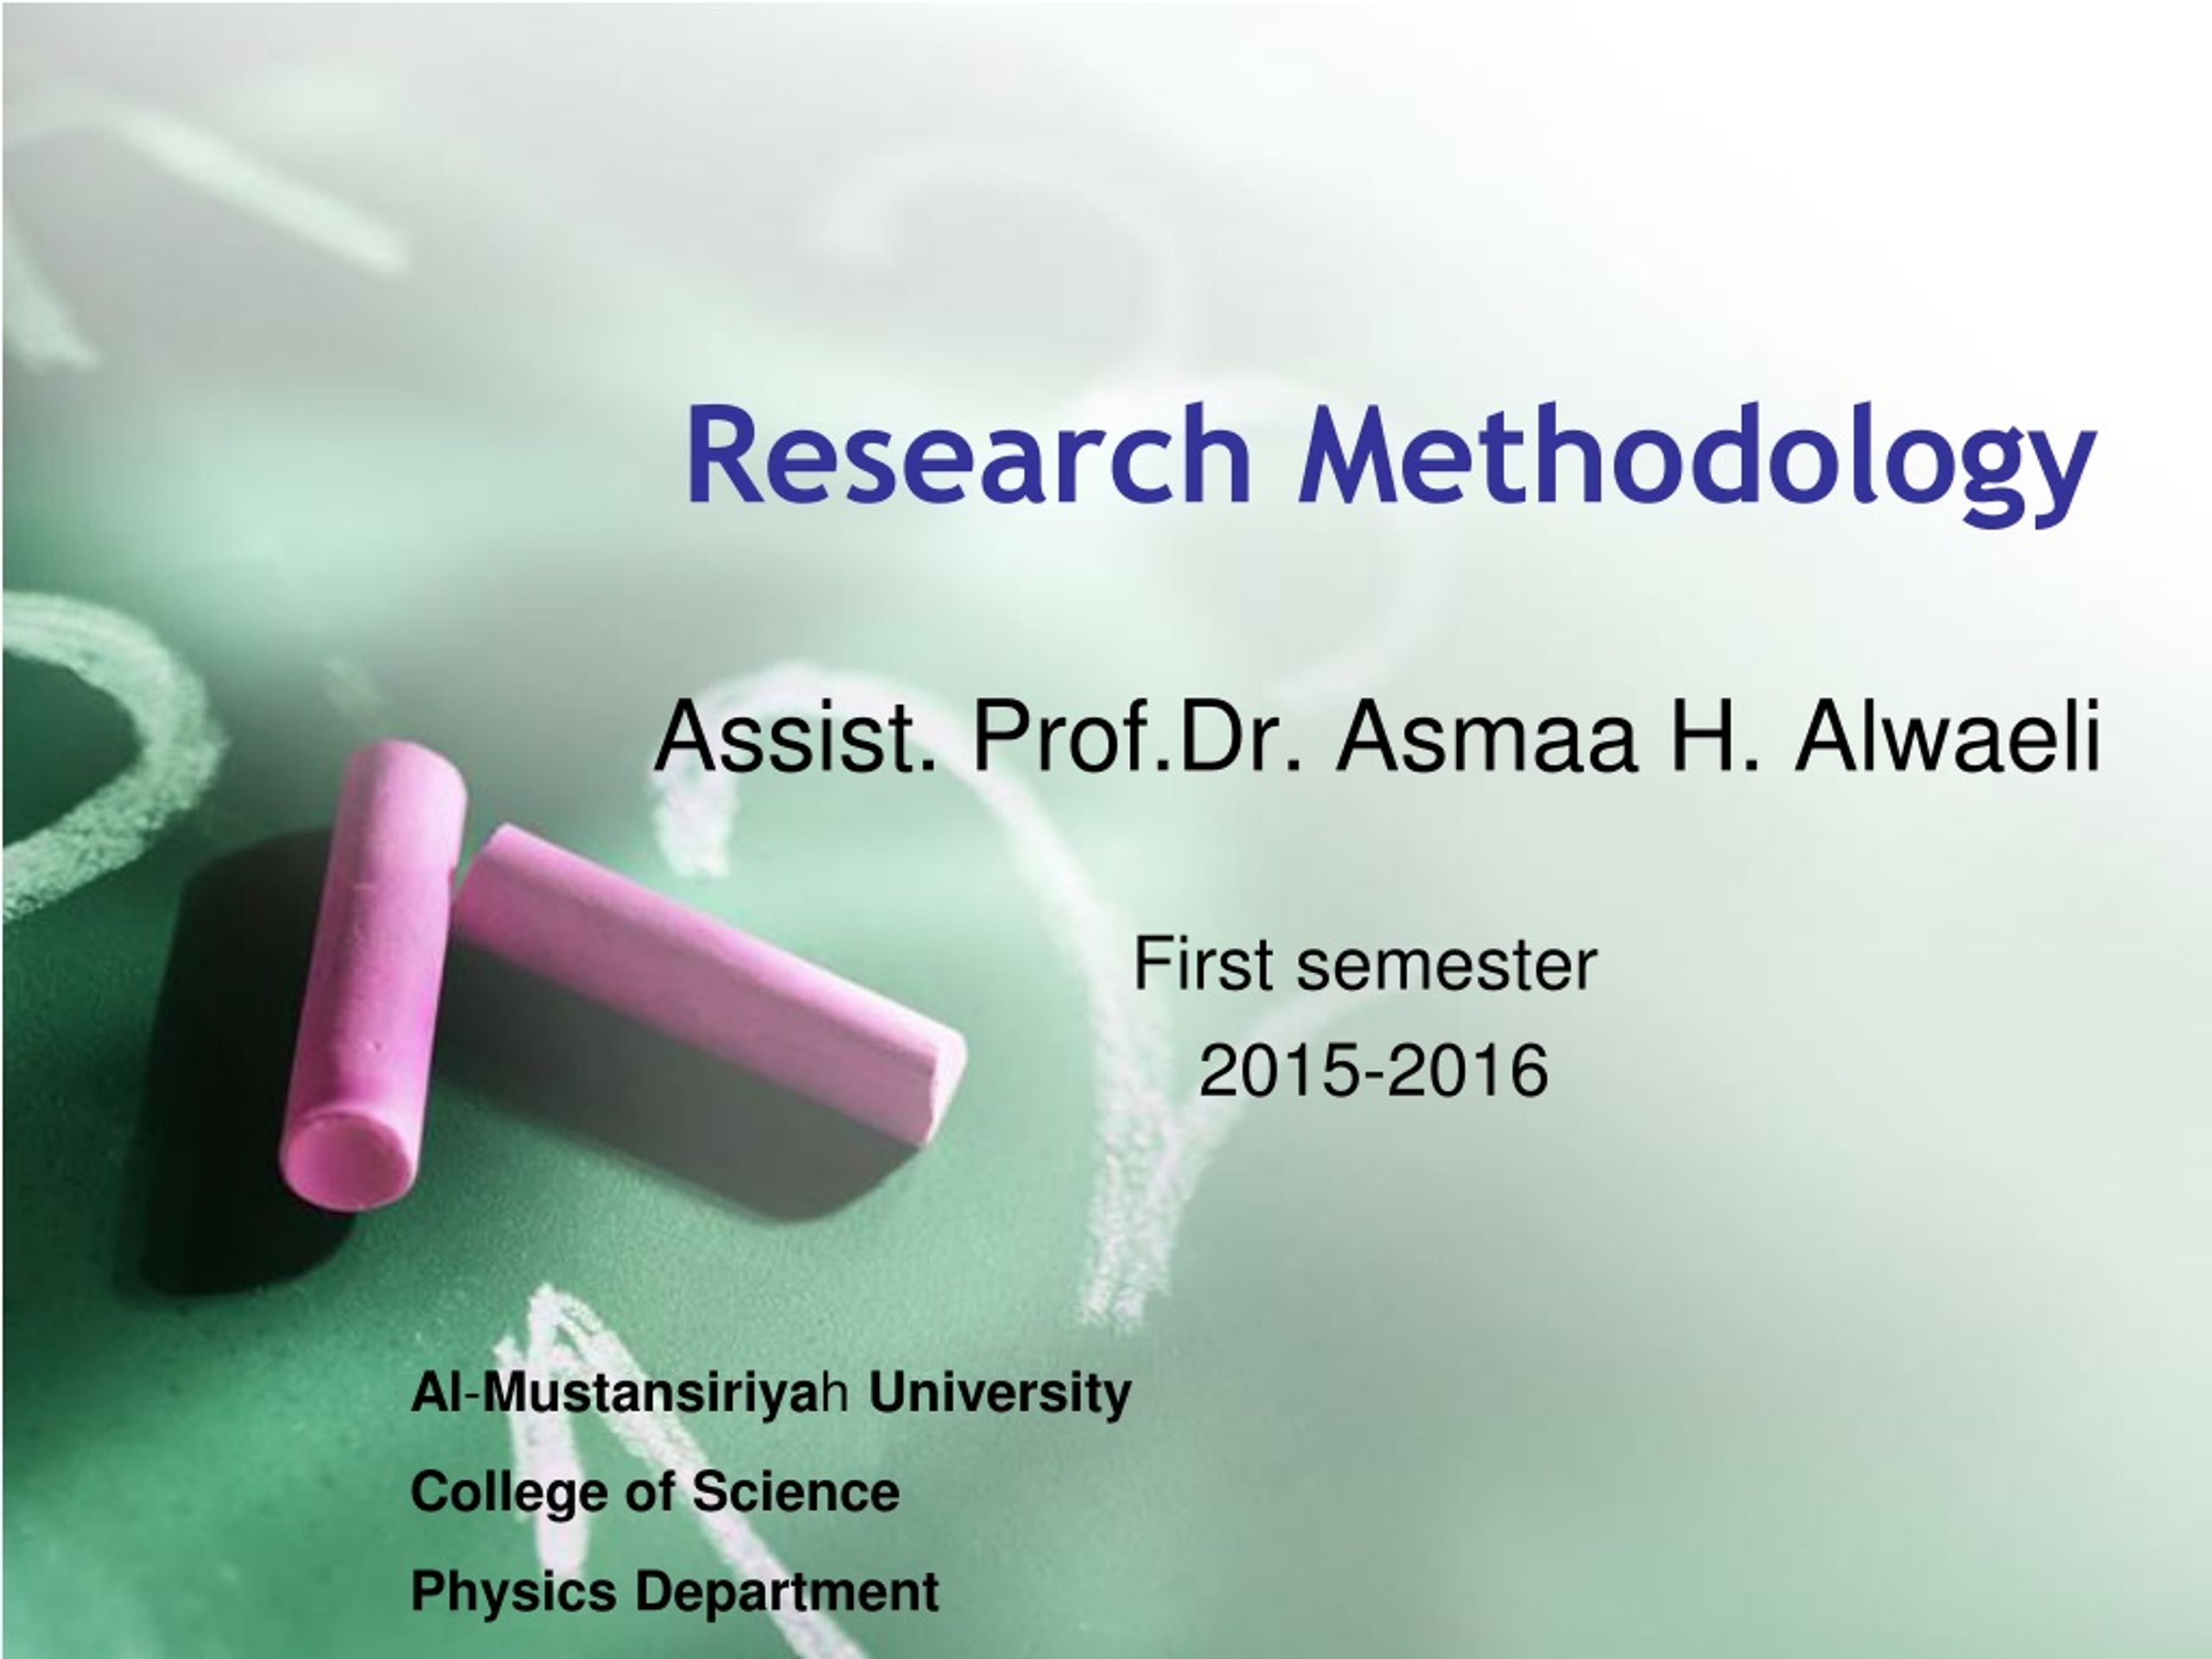 phd research methodology ppt